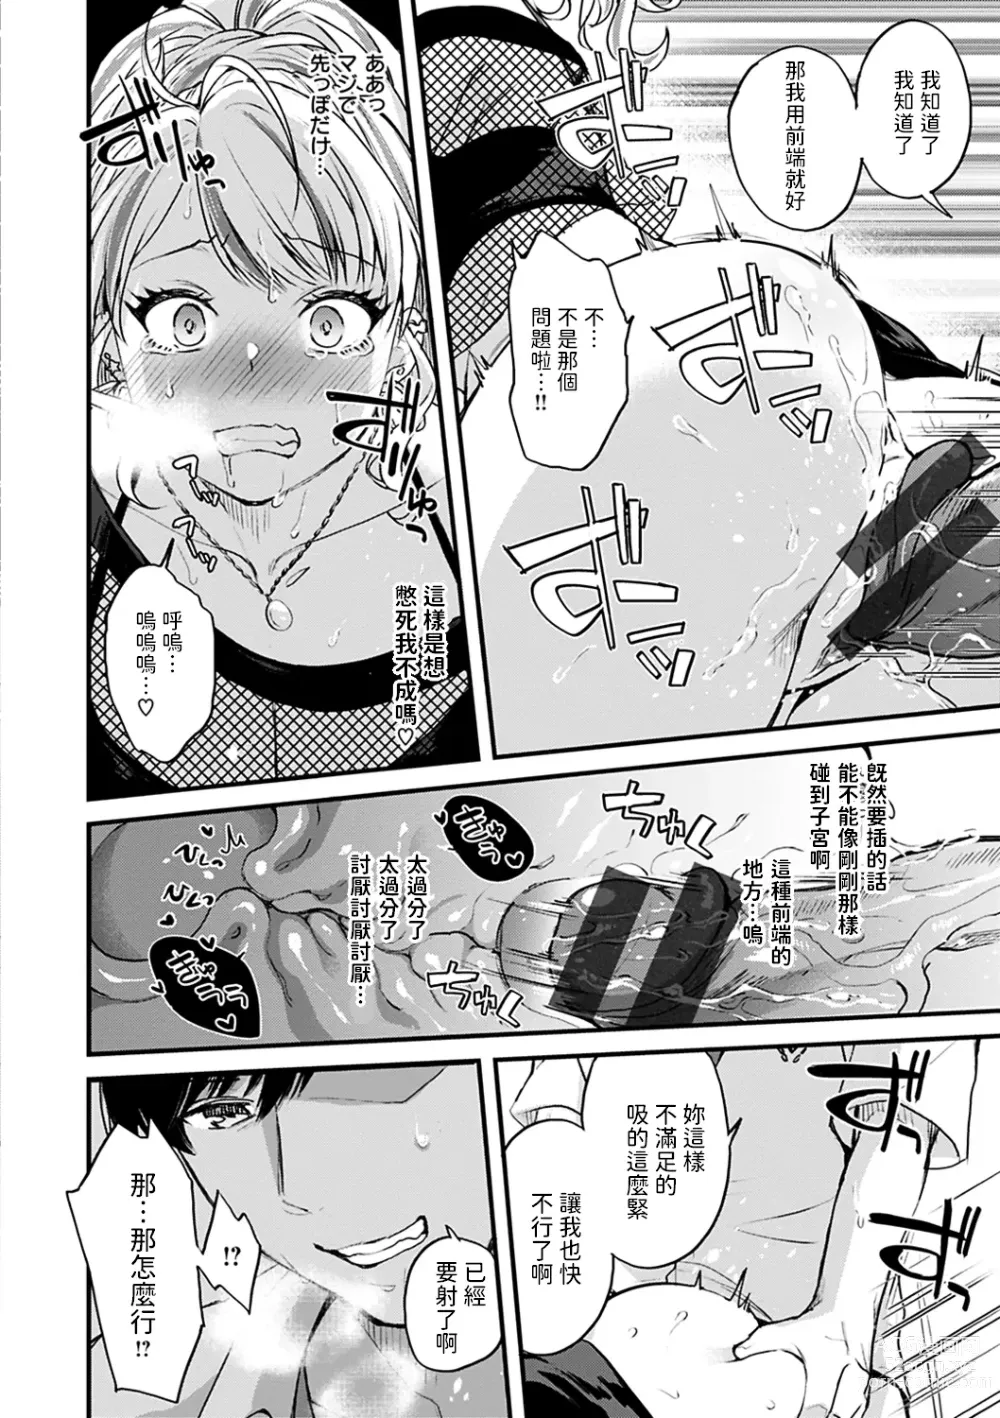 Page 12 of manga Deka Chin Shika Katan!